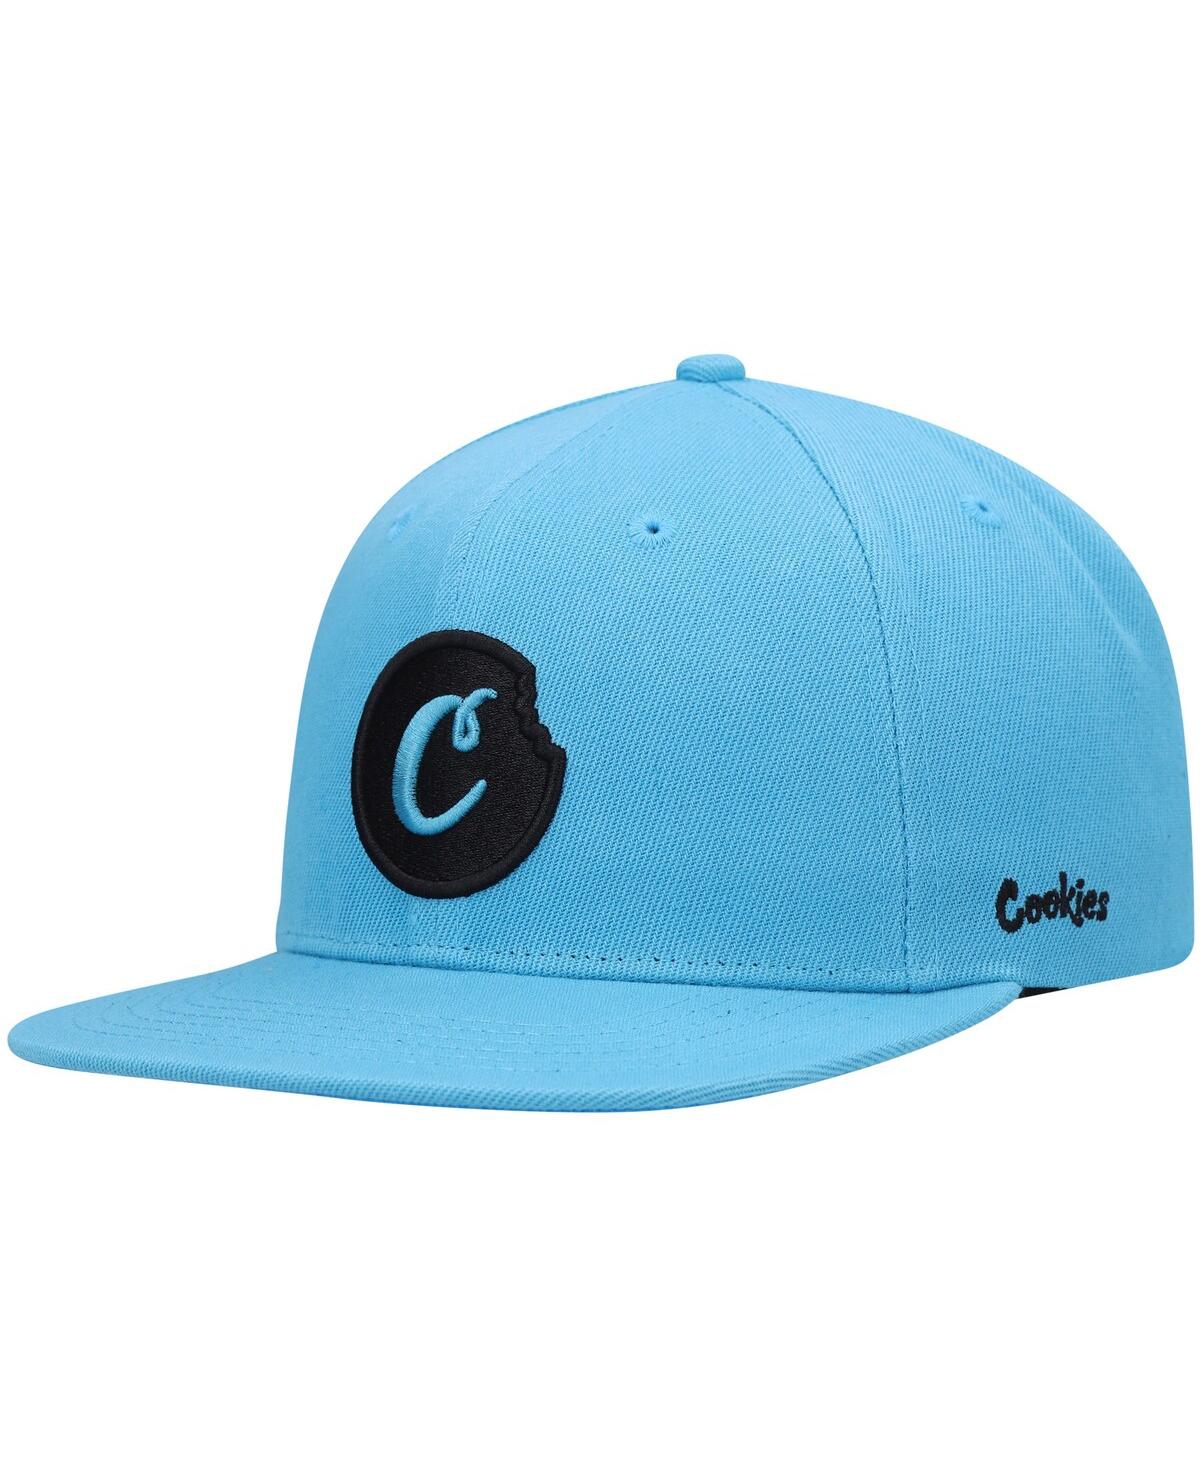 Men's Cookies Blue C-Bite Solid Snapback Hat - Blue